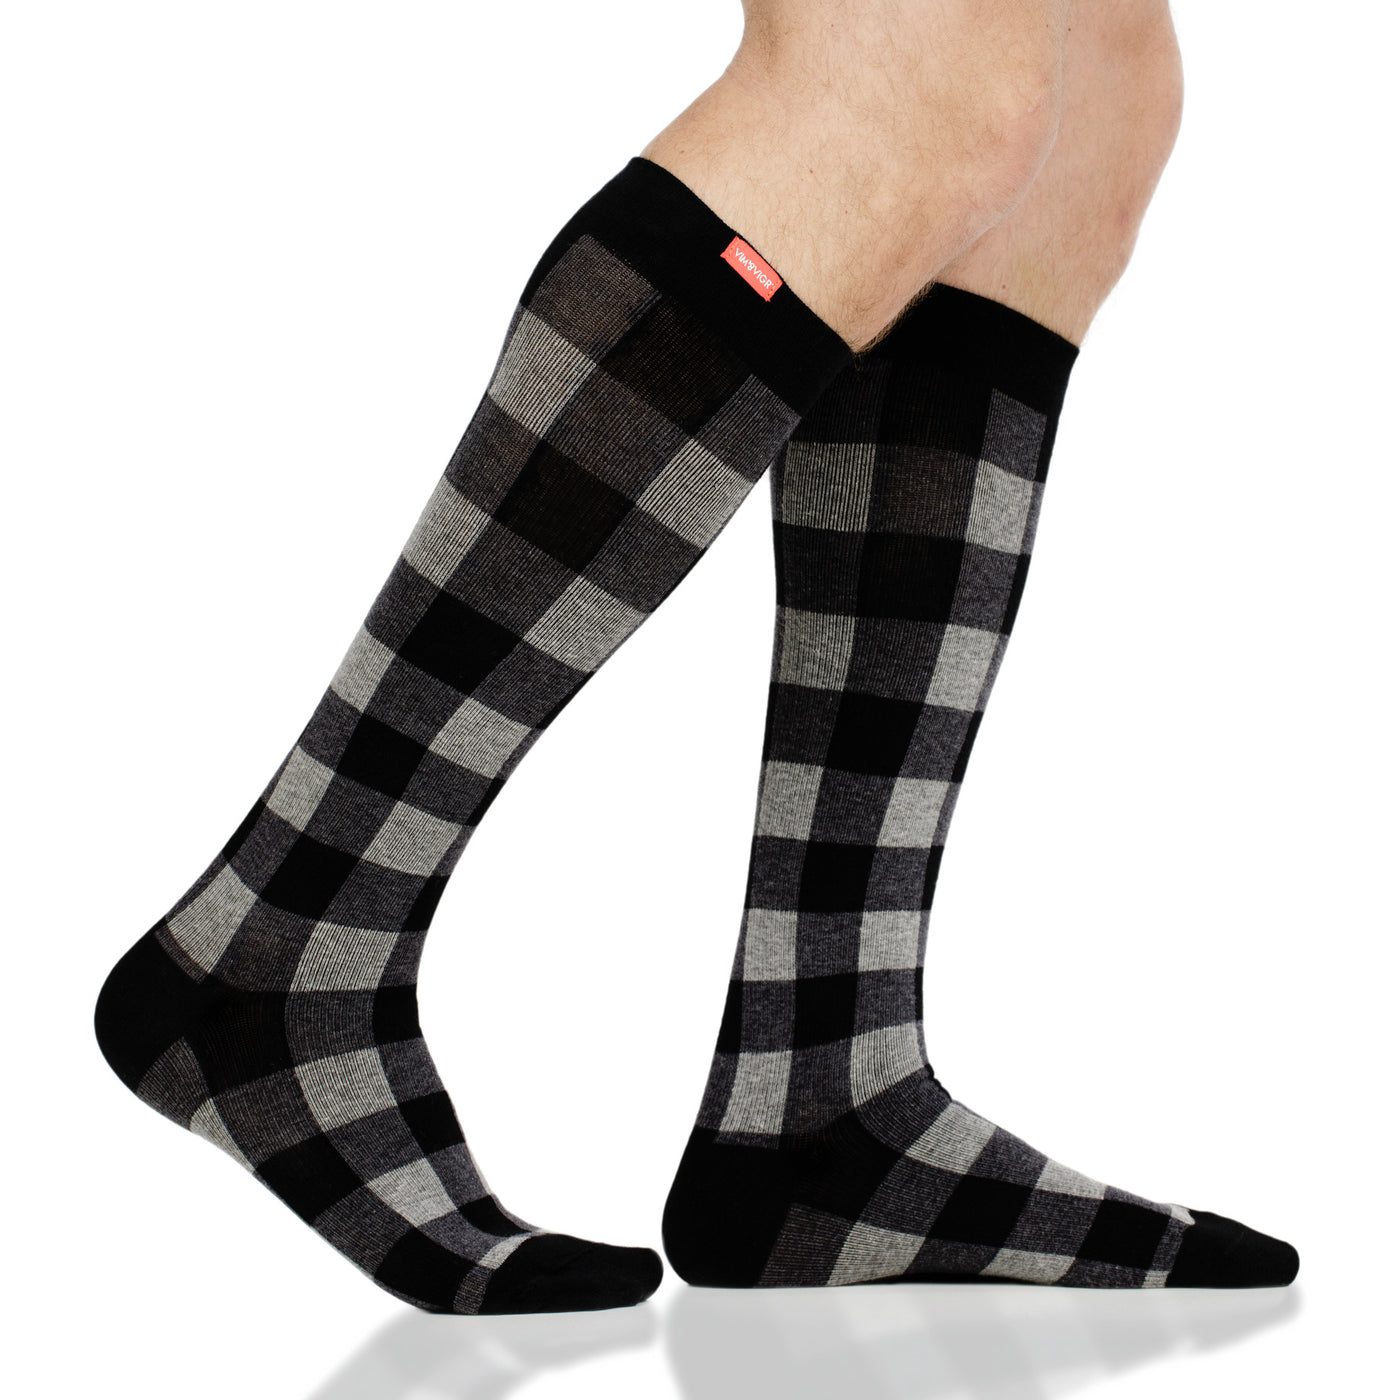 Cotton medical-grade 20-30 mmHg: Montana Plaid Heathered Grey (Cotton) Compression Socks for men & women